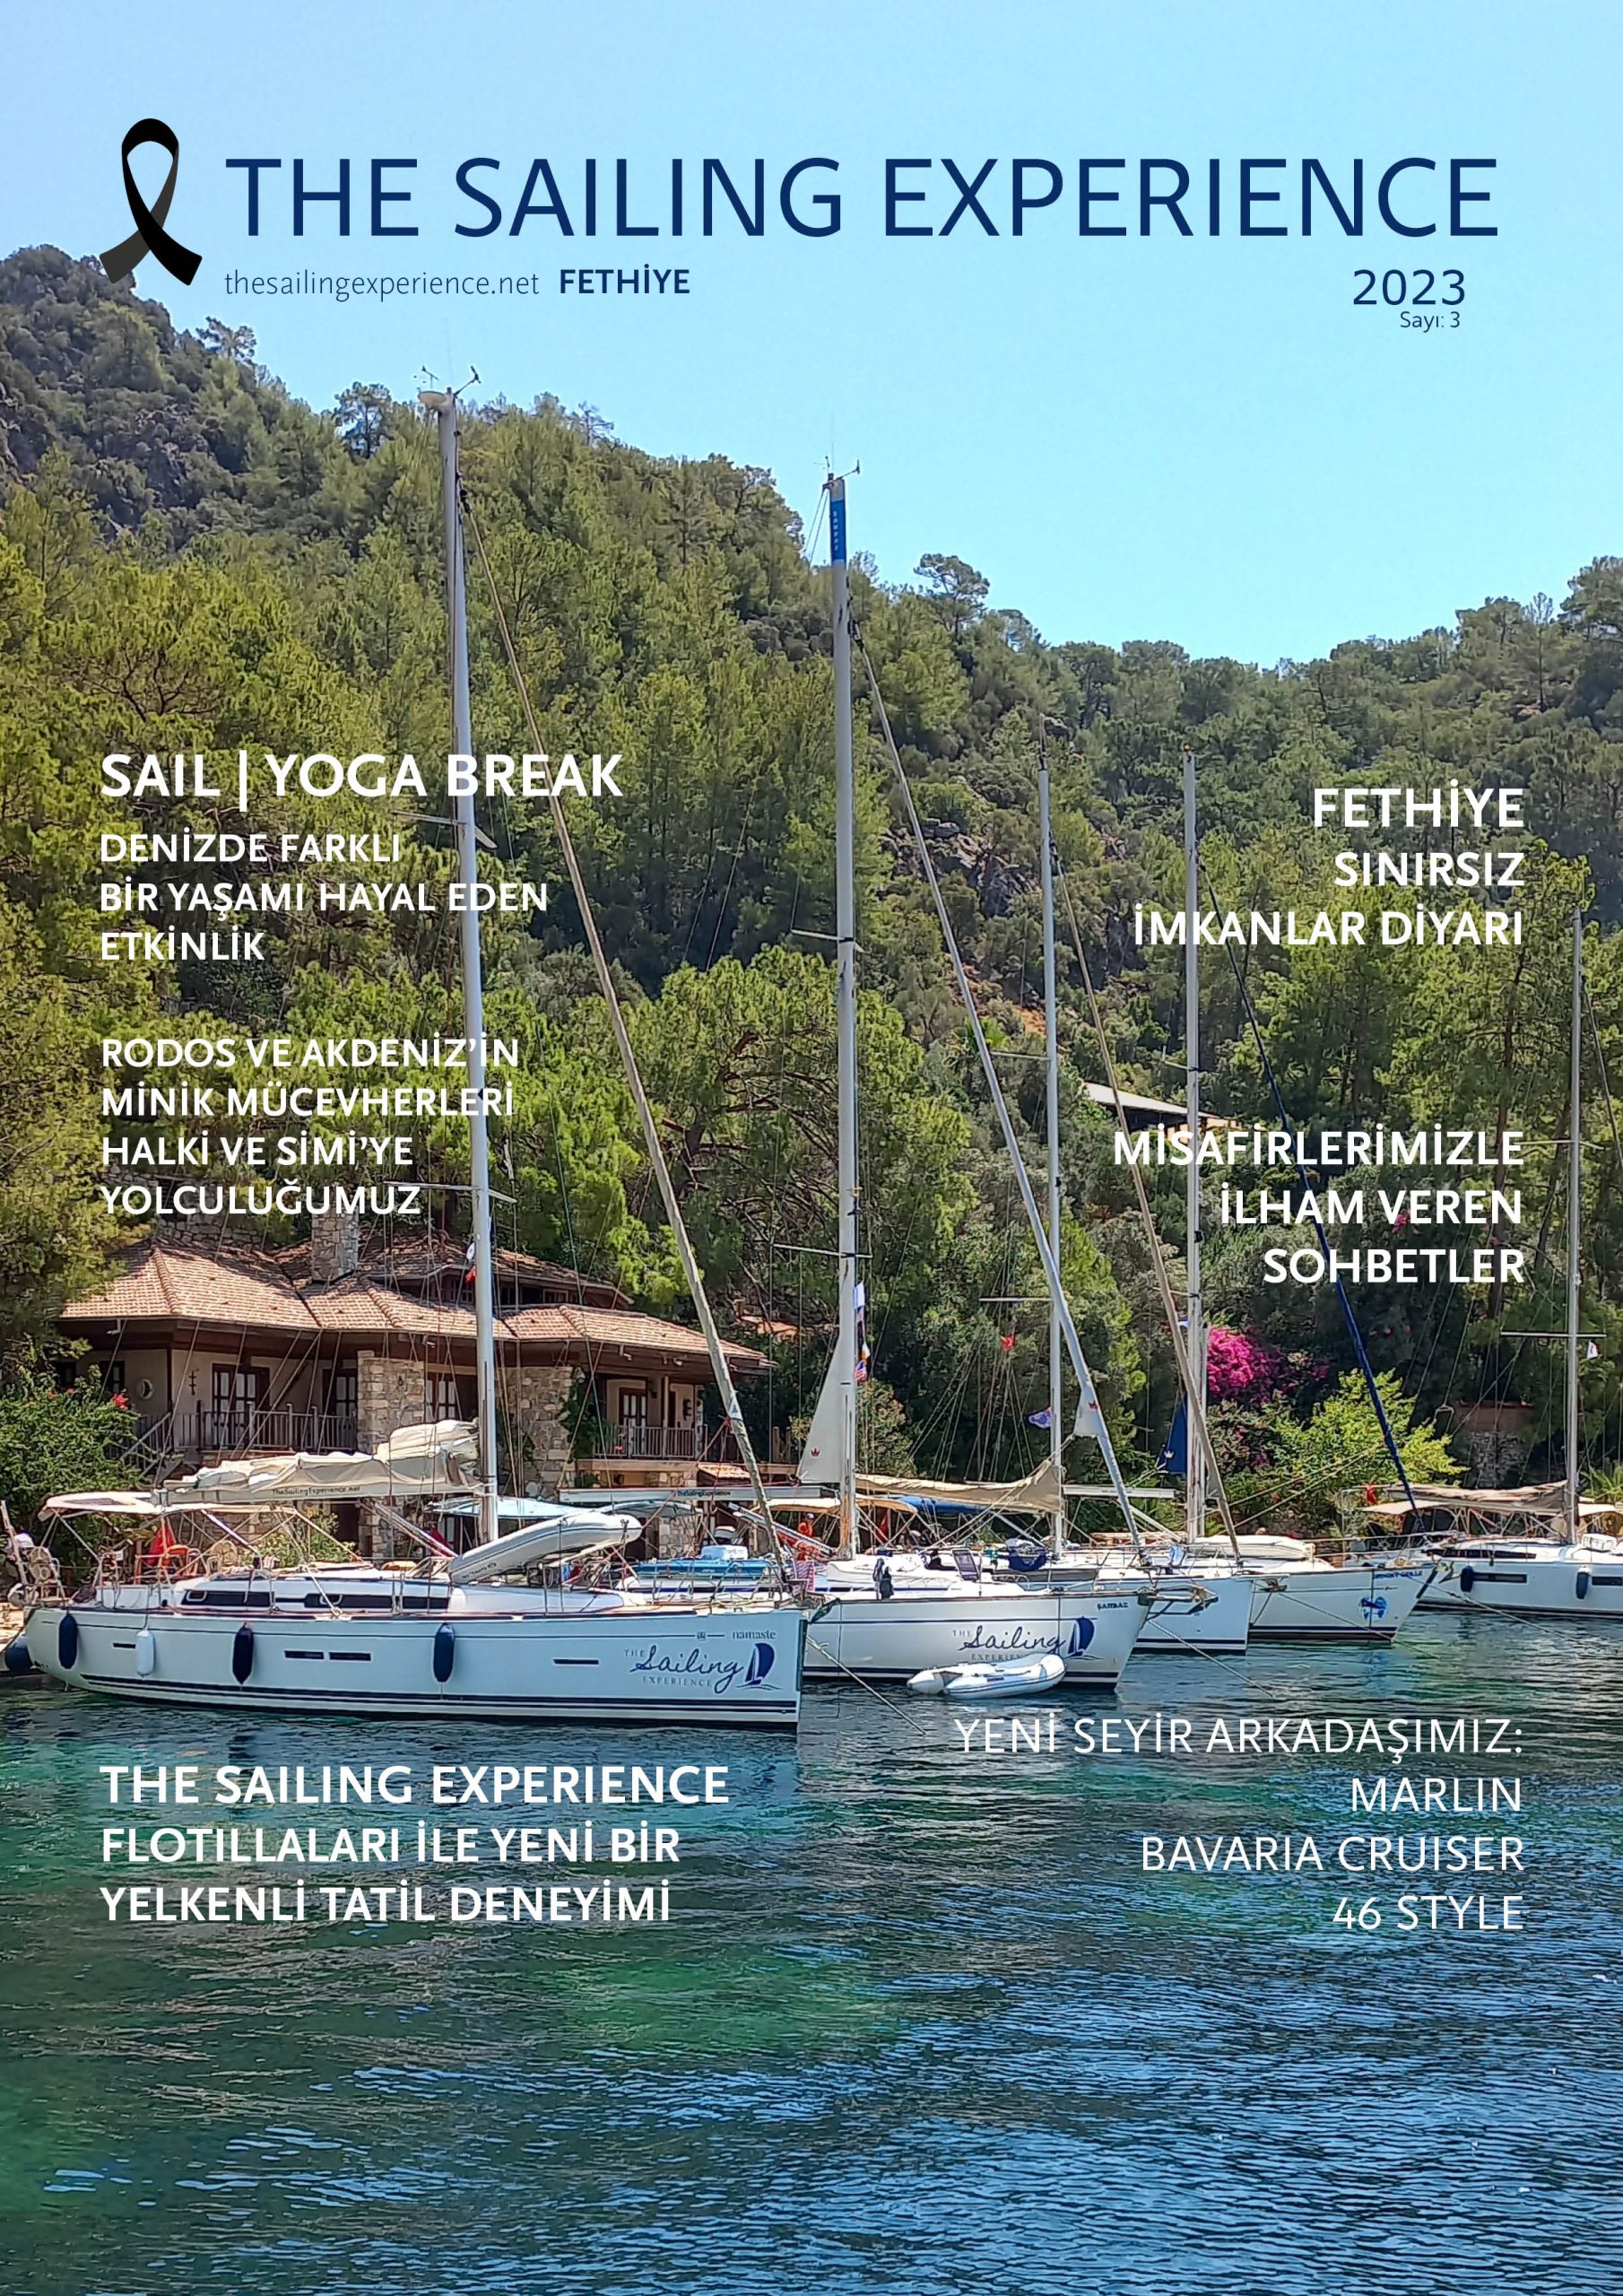 The Sailing Experience Brochure 2023 ana sayfa web